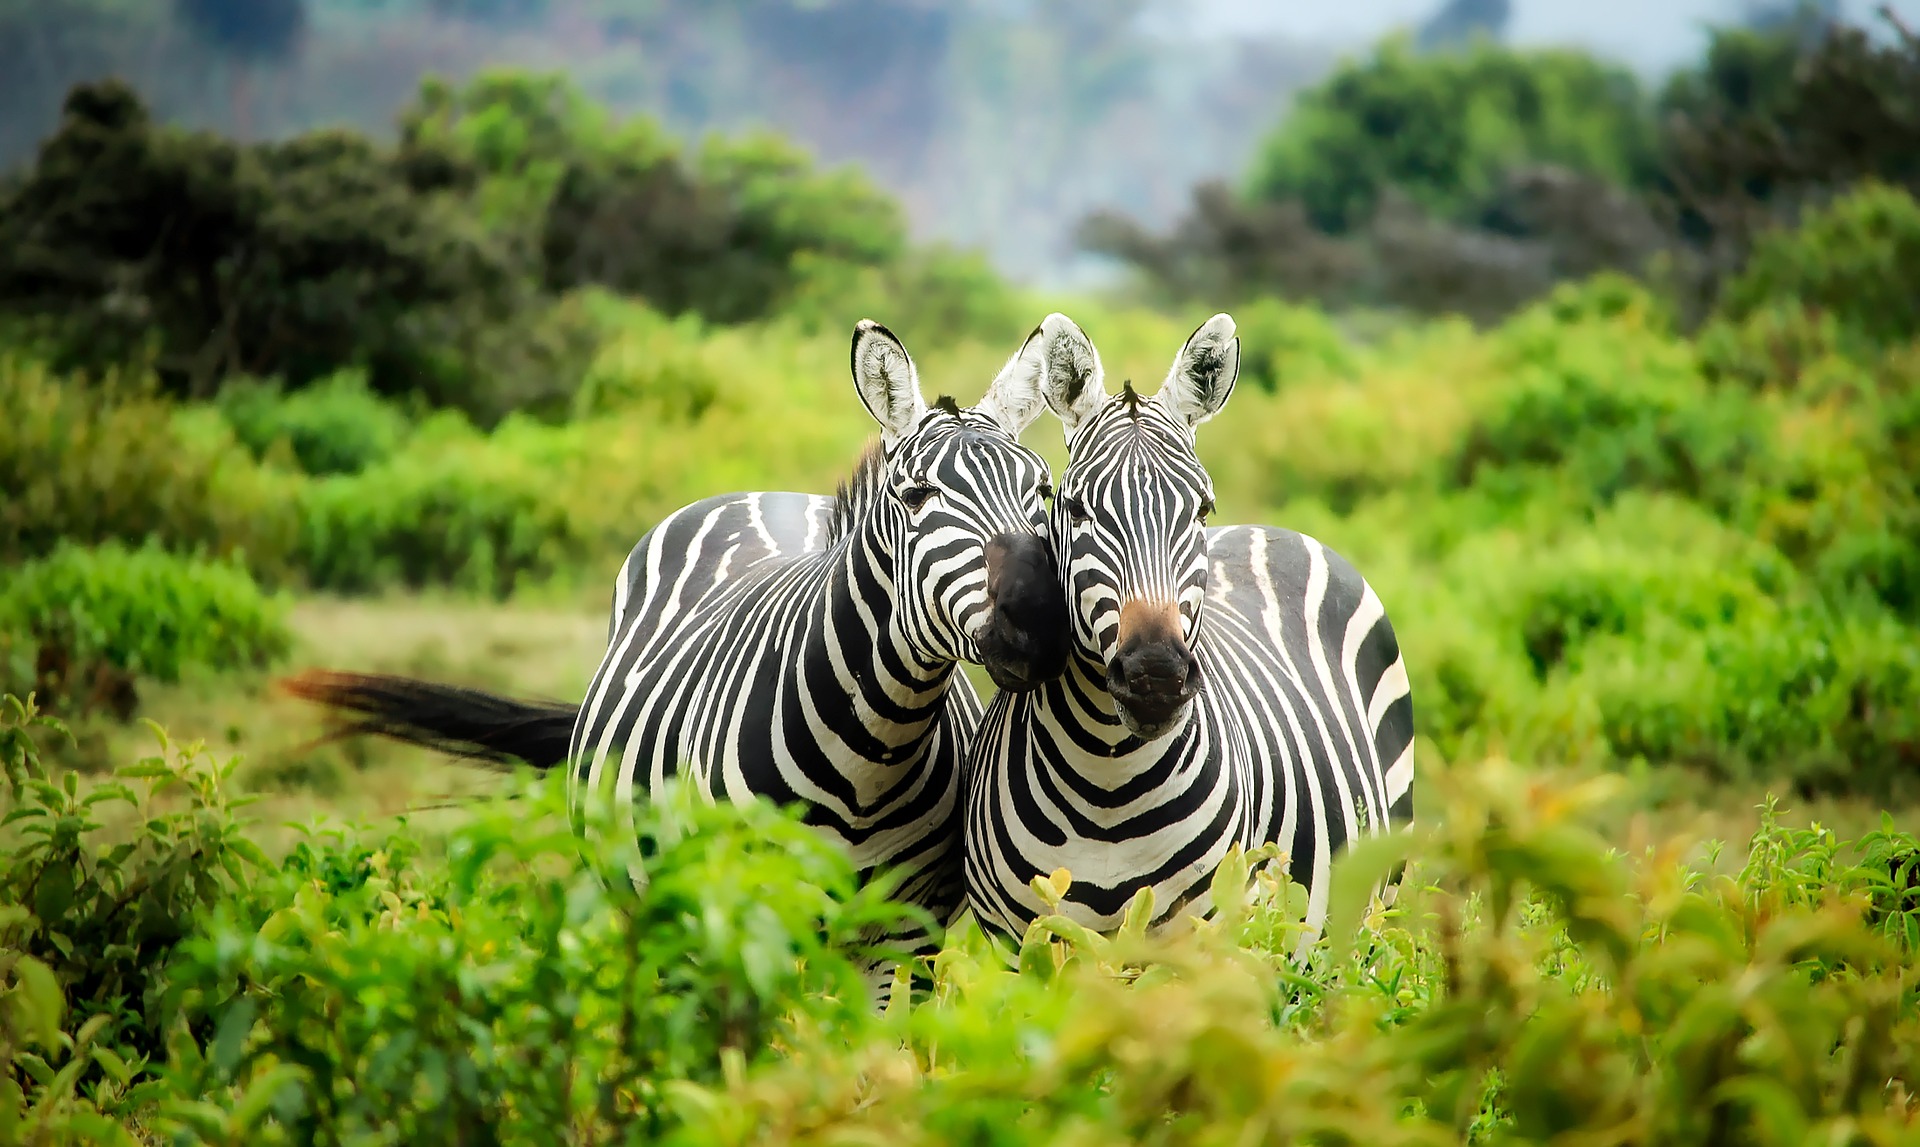 Zebras, Africa, Travel